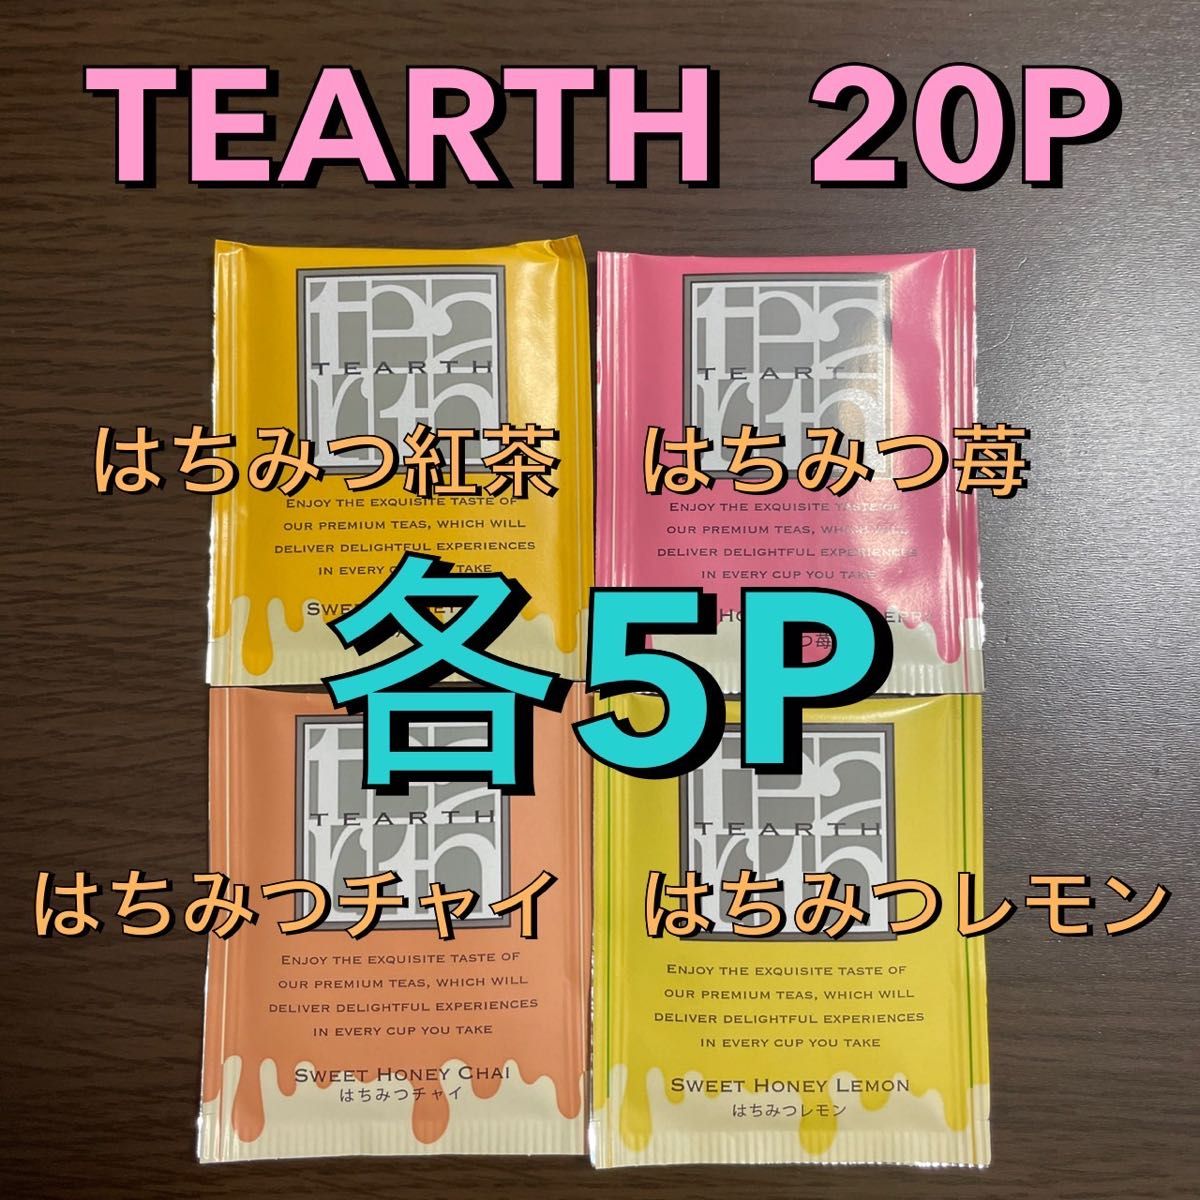 【204】TEARTH 20P はちみつ紅茶 はちみつチャイ はちみつレモン はちみつ苺